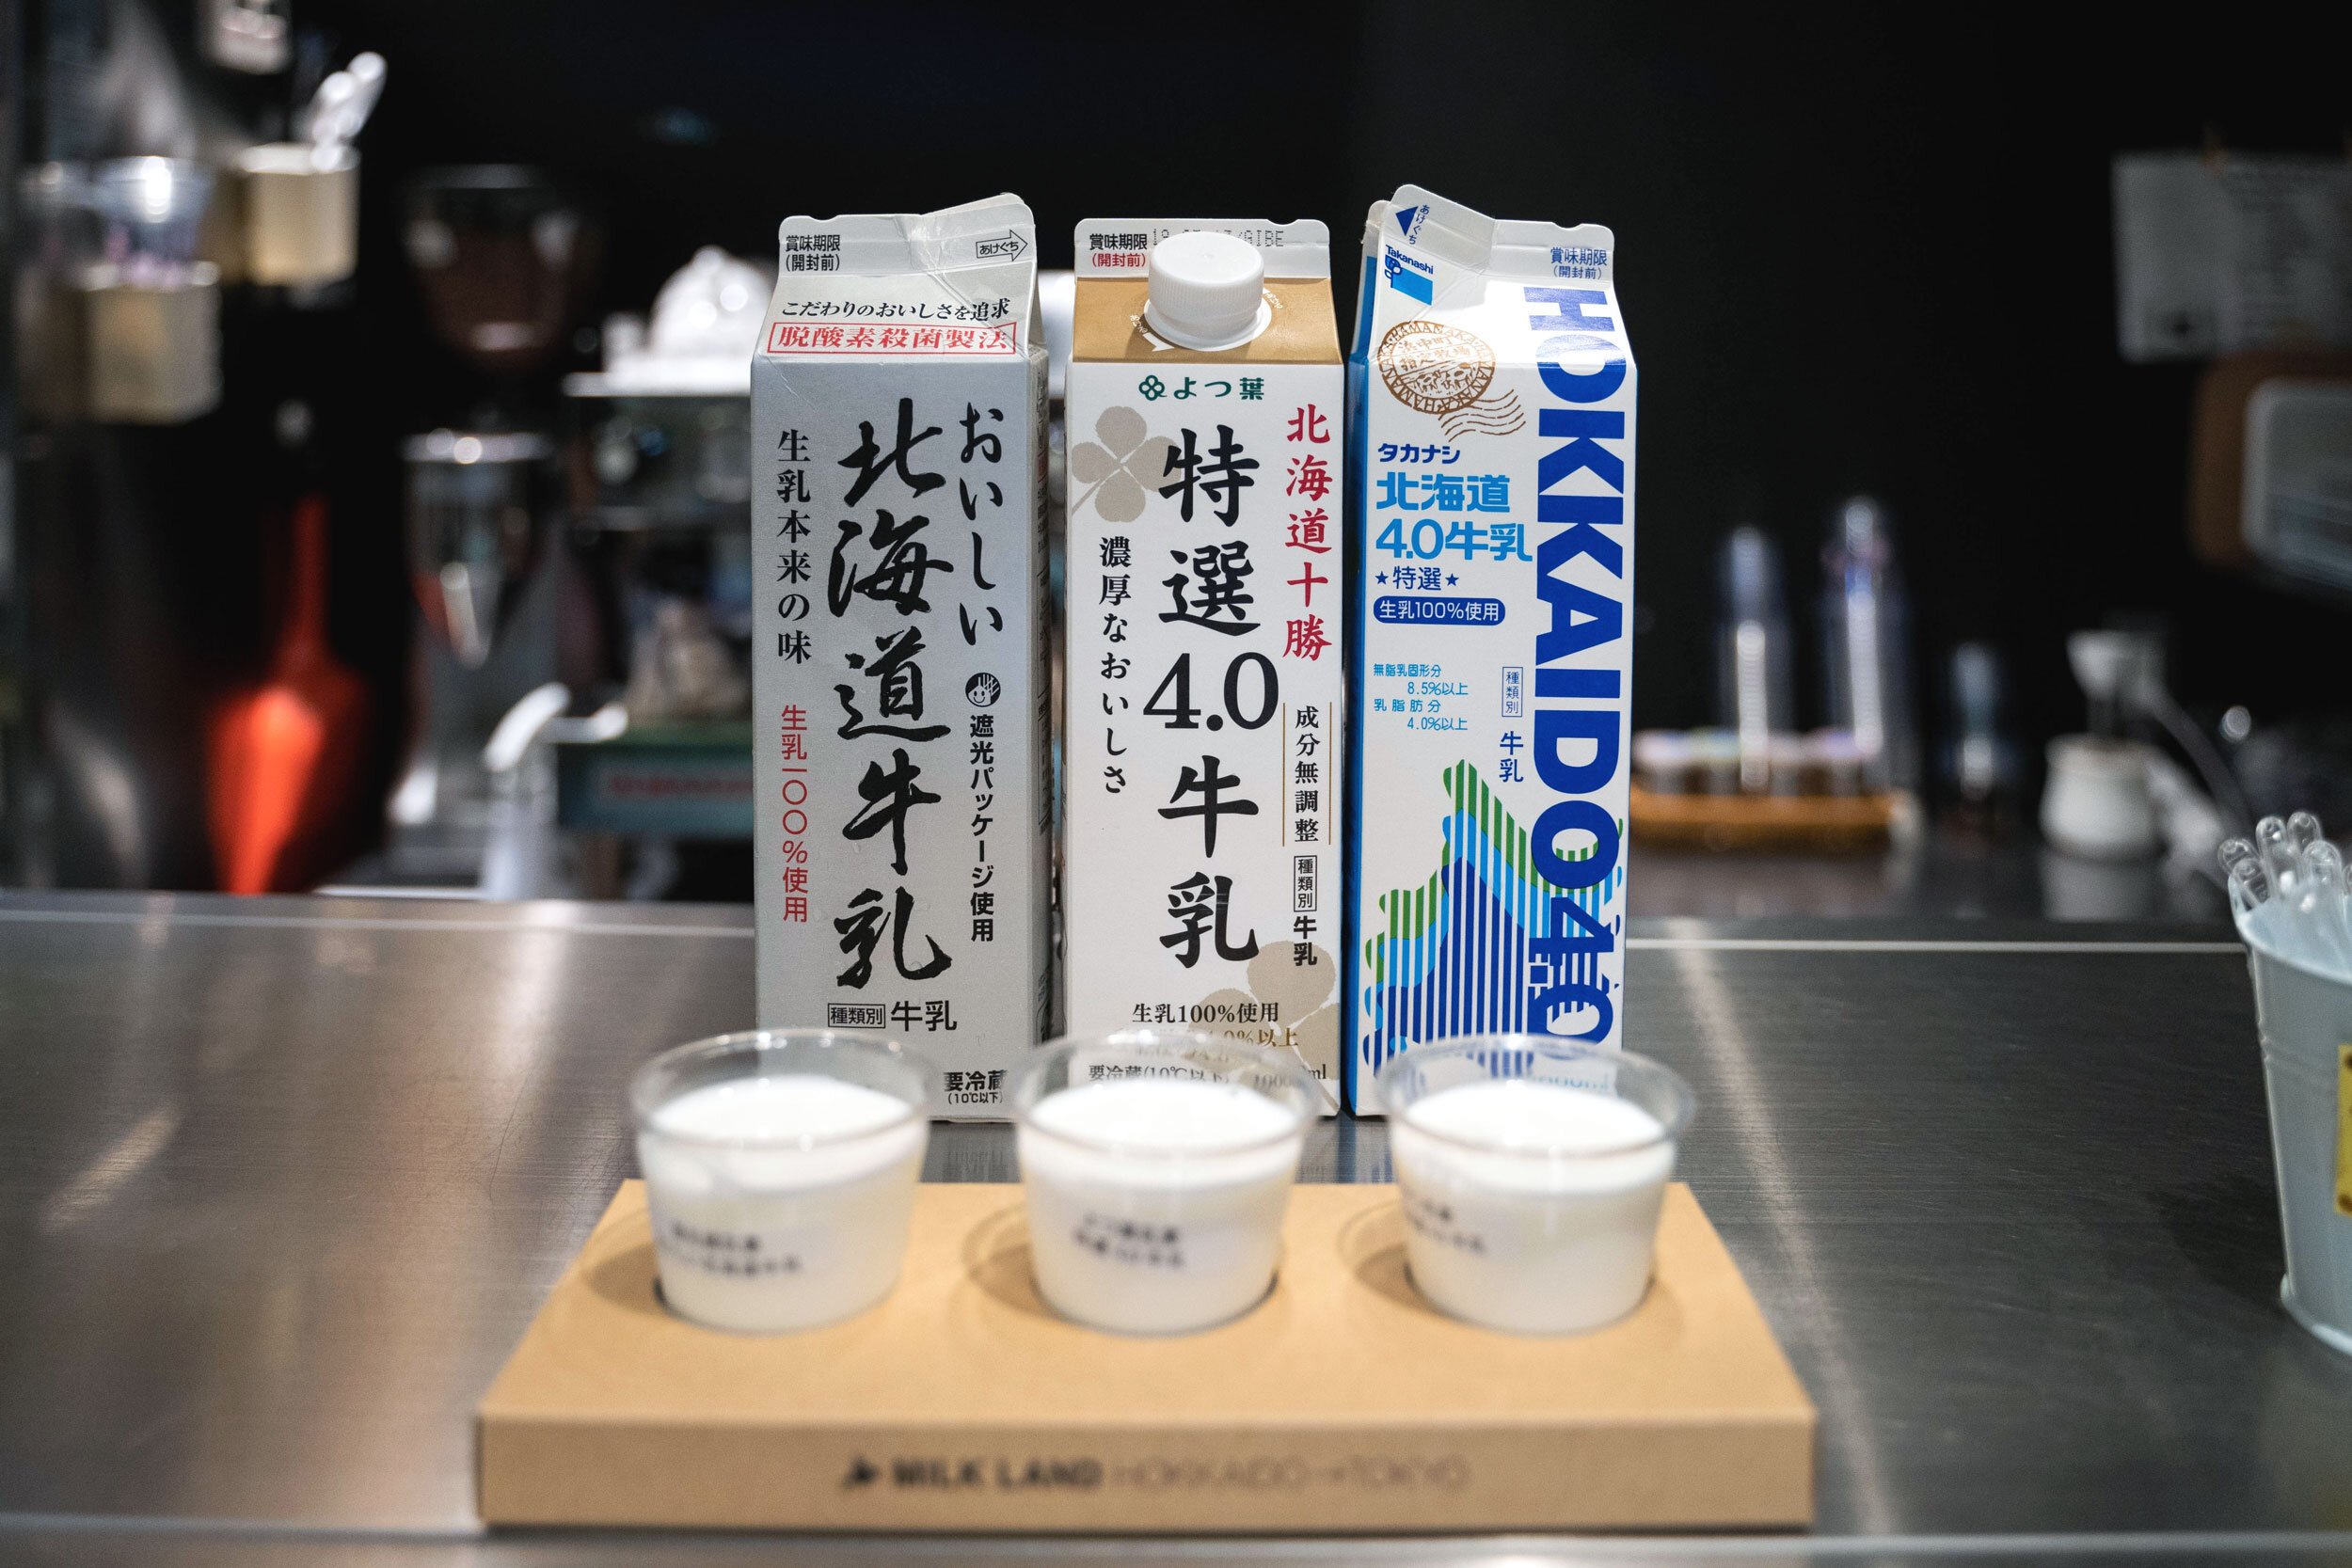 Hokkaido milk sampler